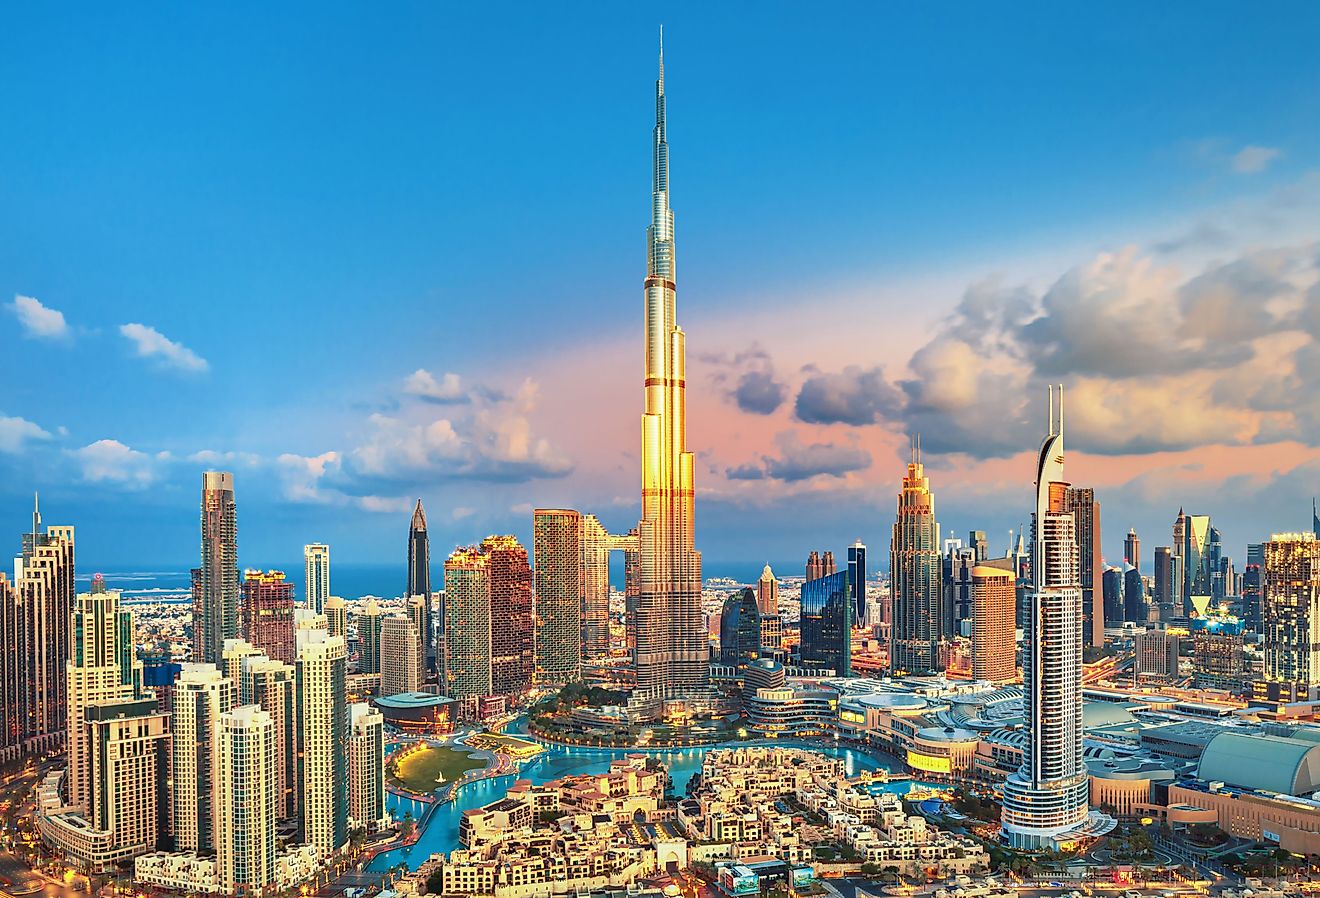 Dubai's amazing city center skyline with luxury skyscrapers, United Arab Emirates. 